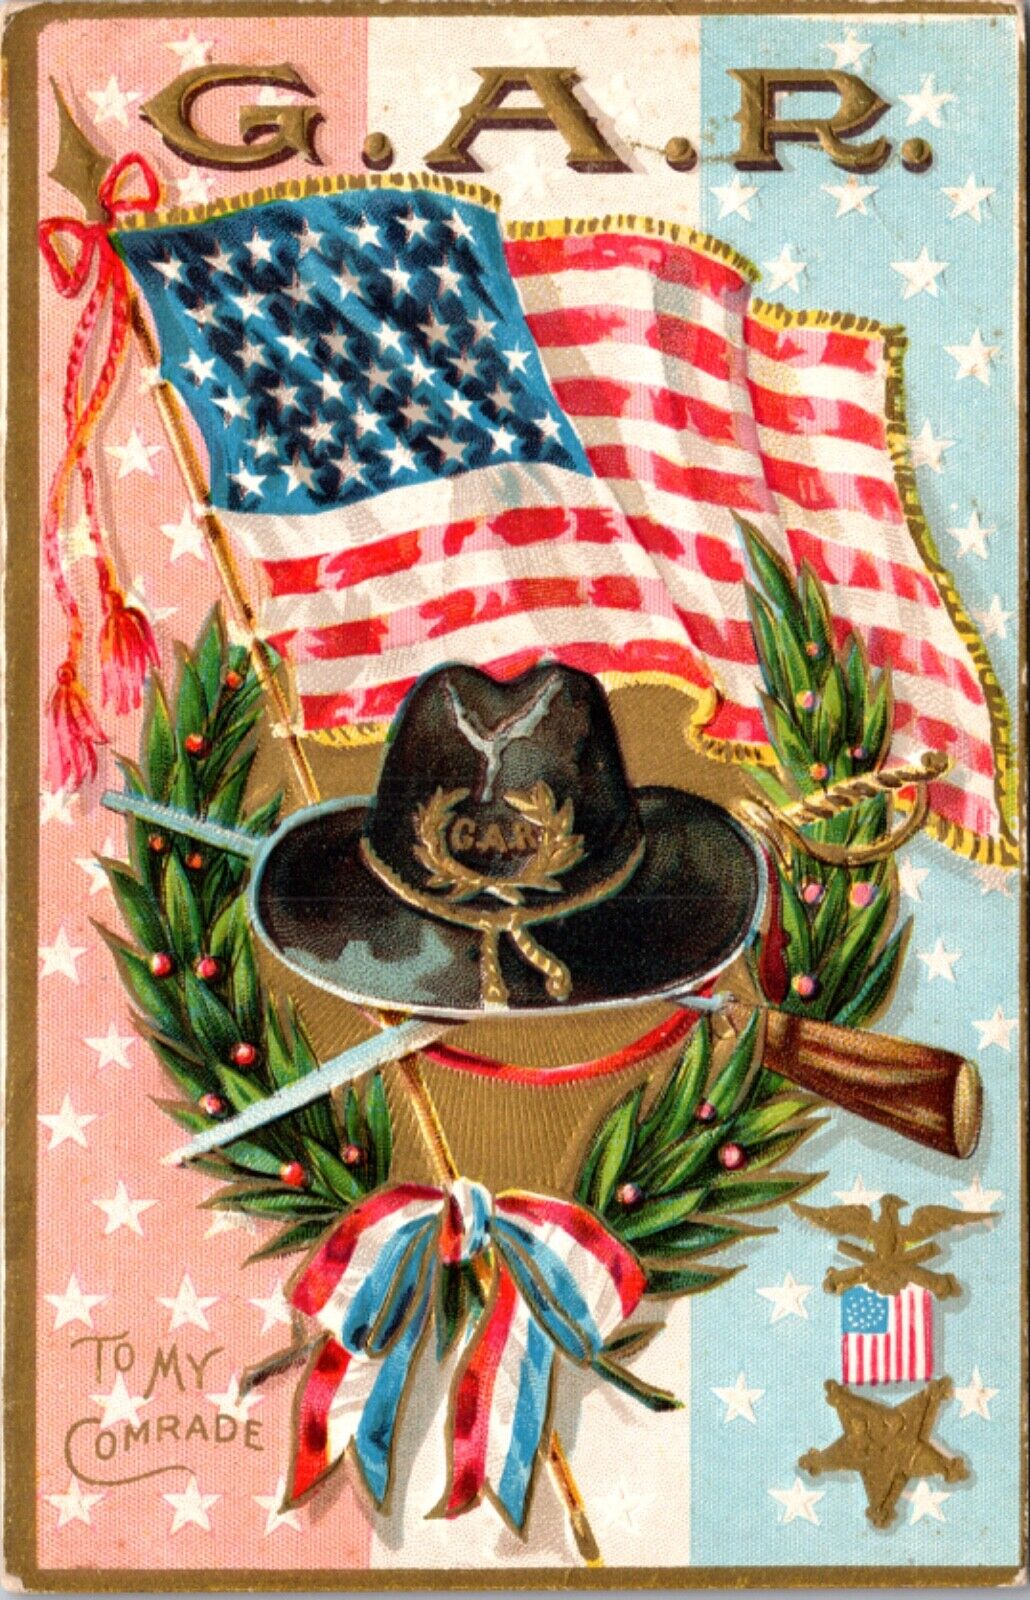 Postcard G.A.R. To My Comrade American Flag Sword, Hat, Rifle Patriotic